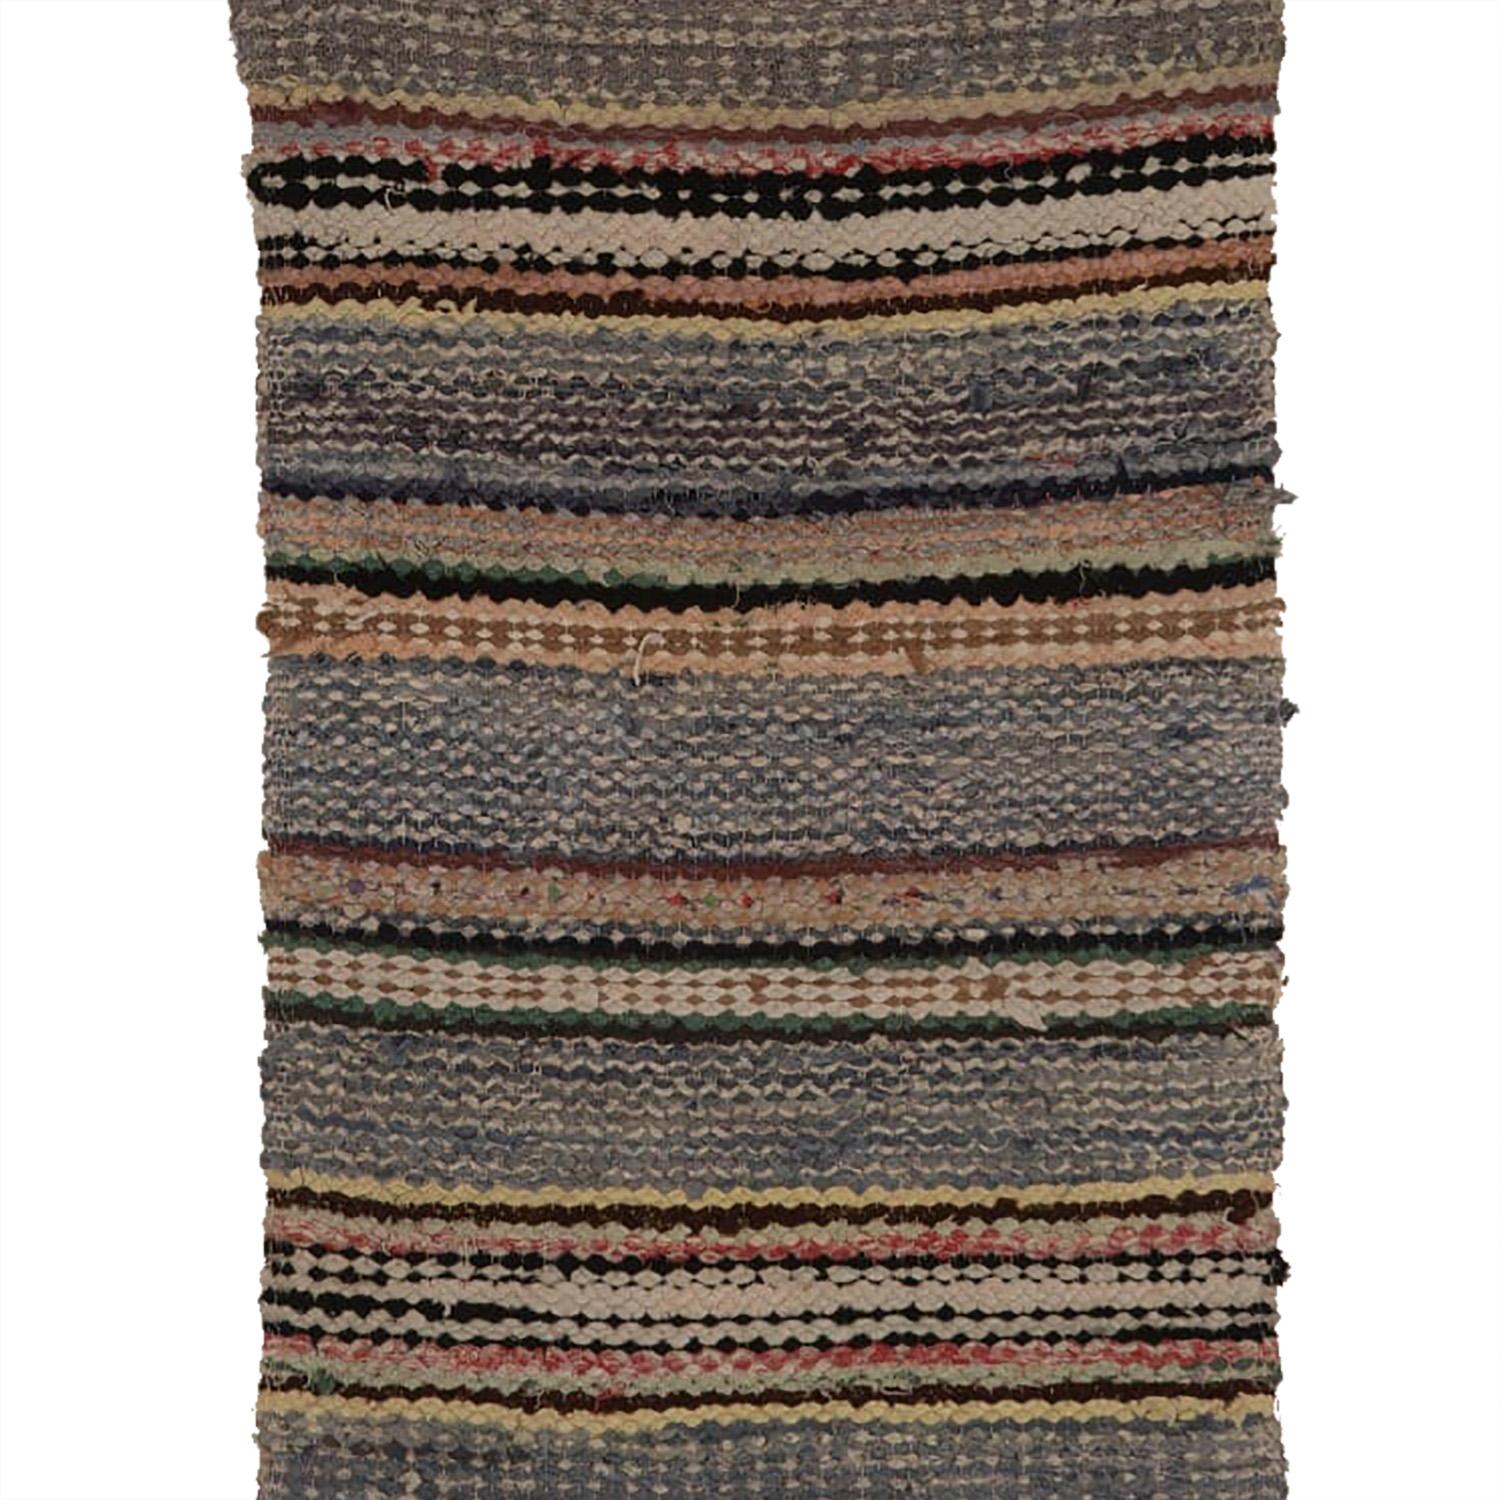 Swedish 1950 multicolored handwoven rug.